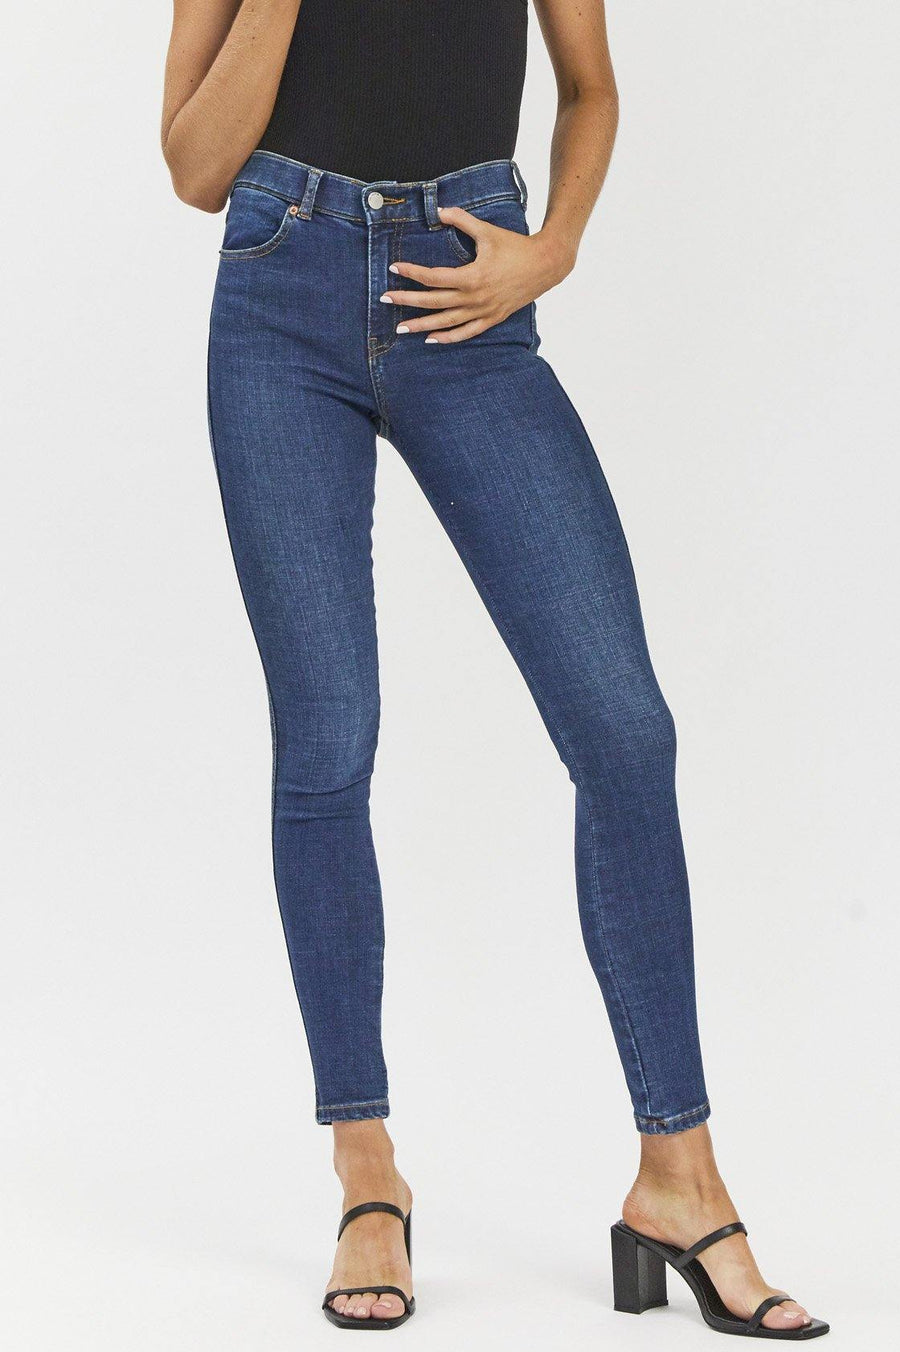 Lexy Jeans - Hurricane Dark Blue - Dr Denim Jeans - Australia & NZ